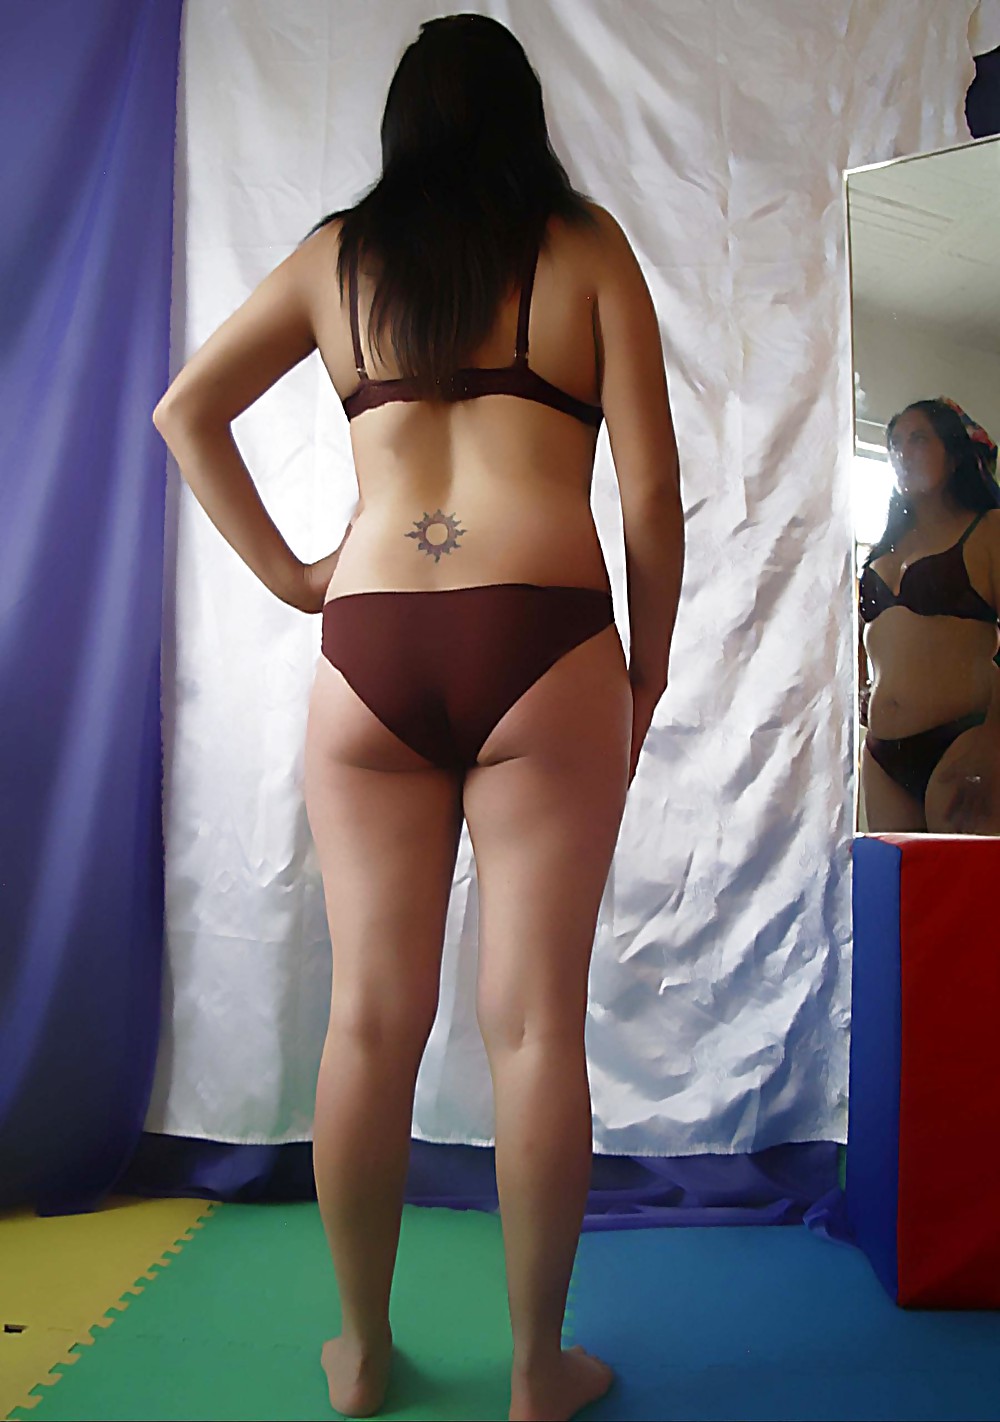 Amateur latina models her bra and panty #24599266